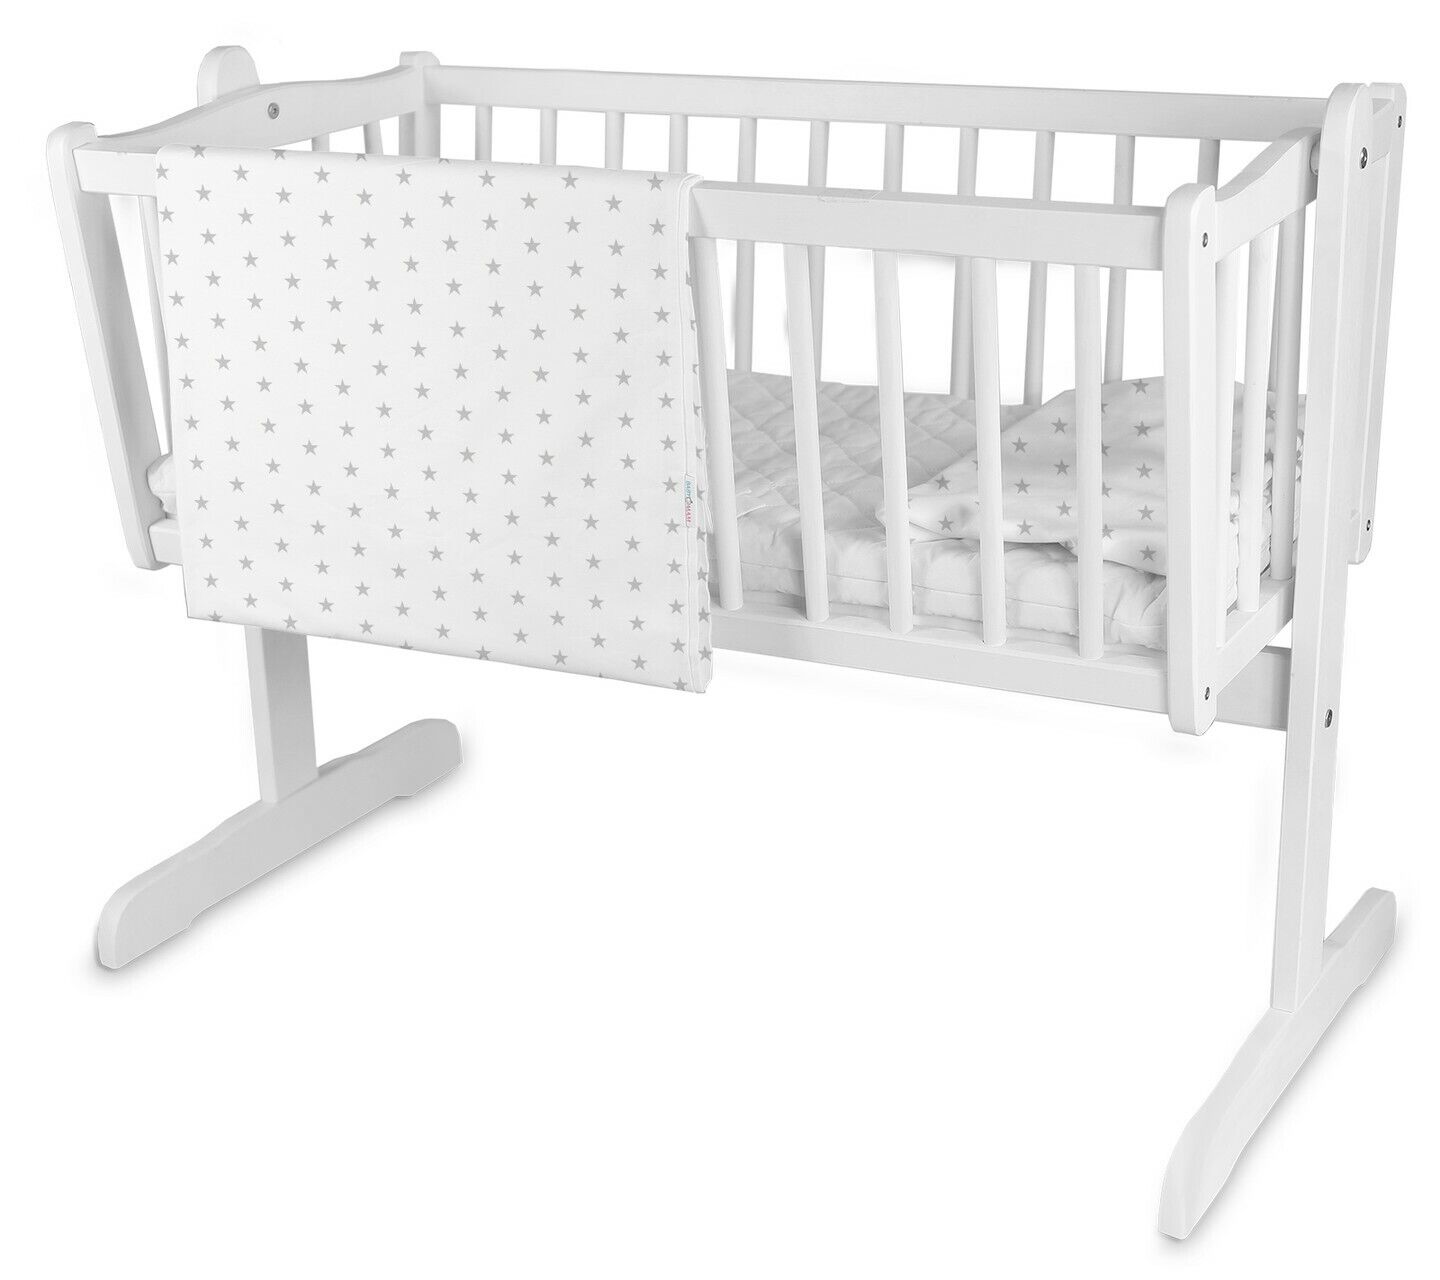 Baby bedding set 5pc nursery cotton pillow duvet bumper 70x80cm Small grey star on white